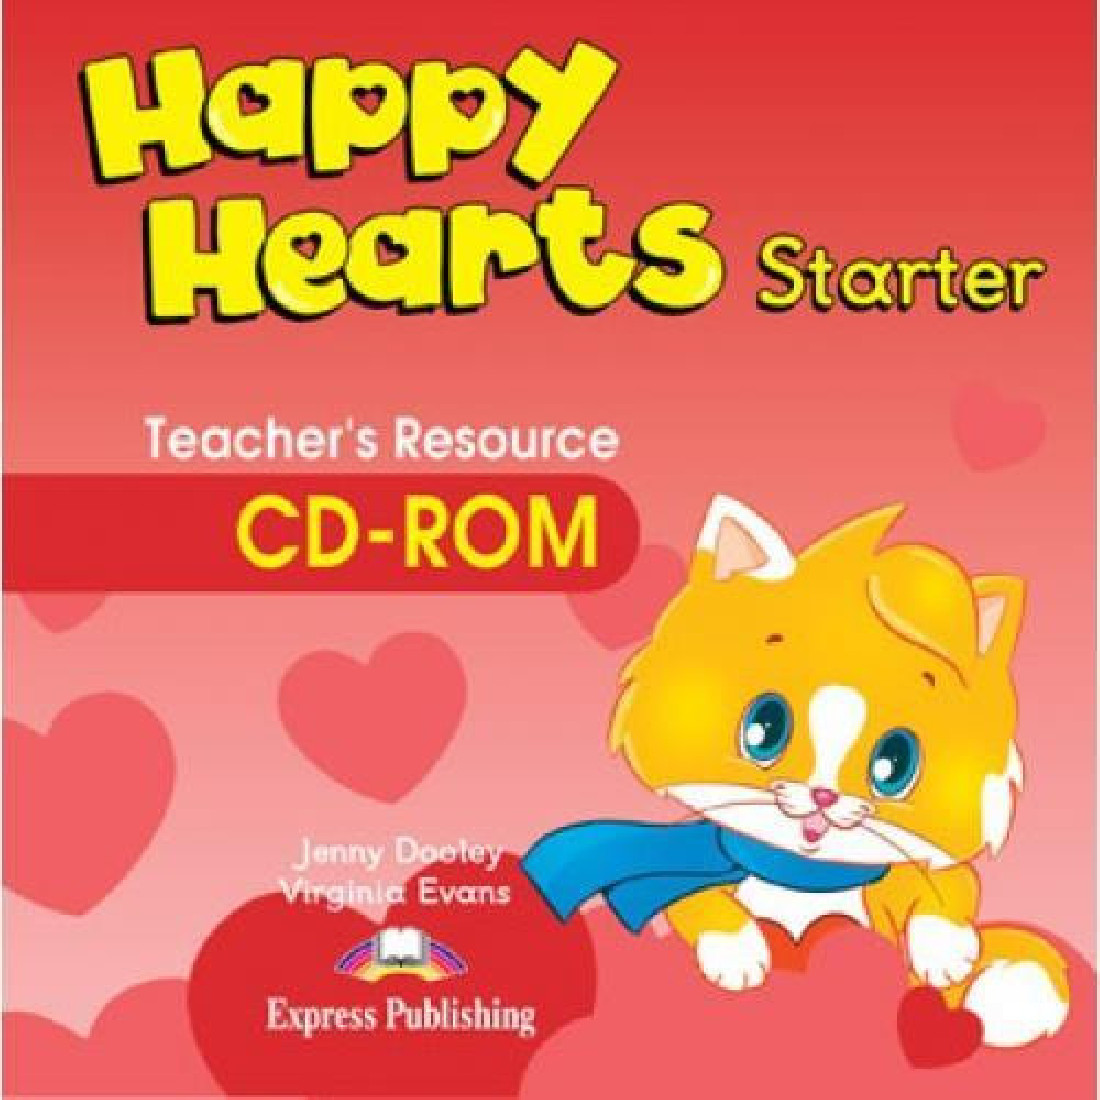 HAPPY HEARTS STARTER TEACHERS RESOURCE CD-ROM